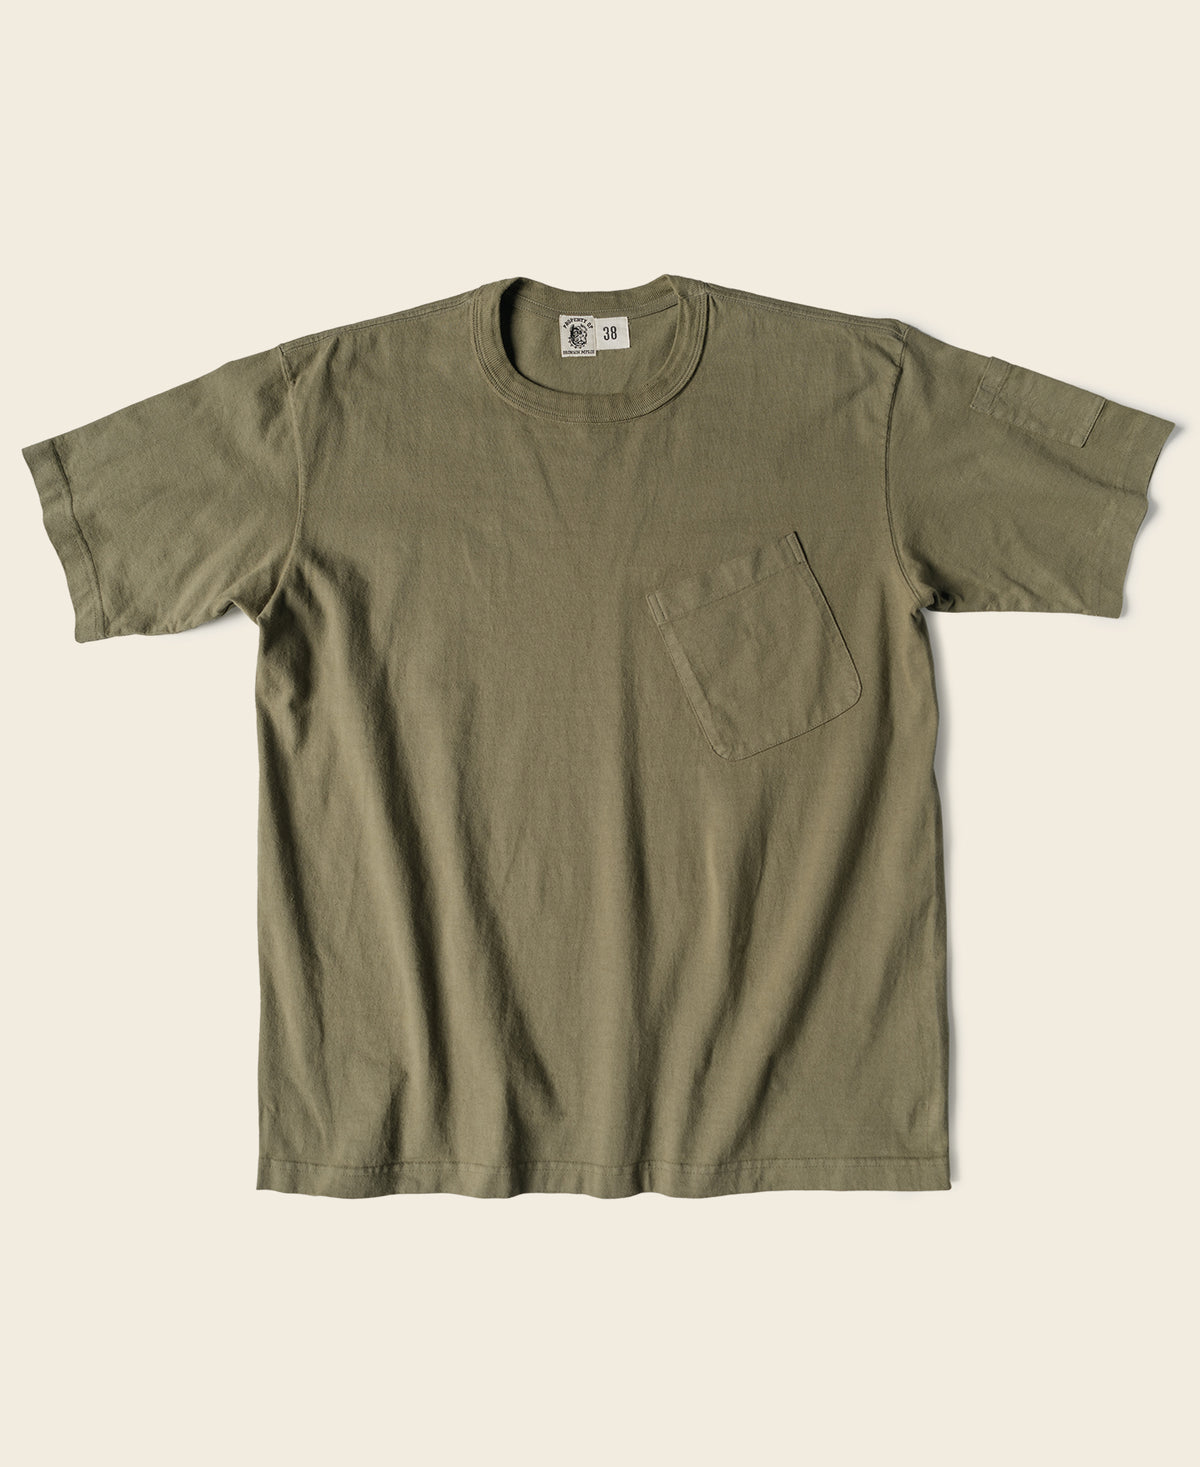 Slanted Pocket High Twist Cotton Tubular T-Shirt - Olive